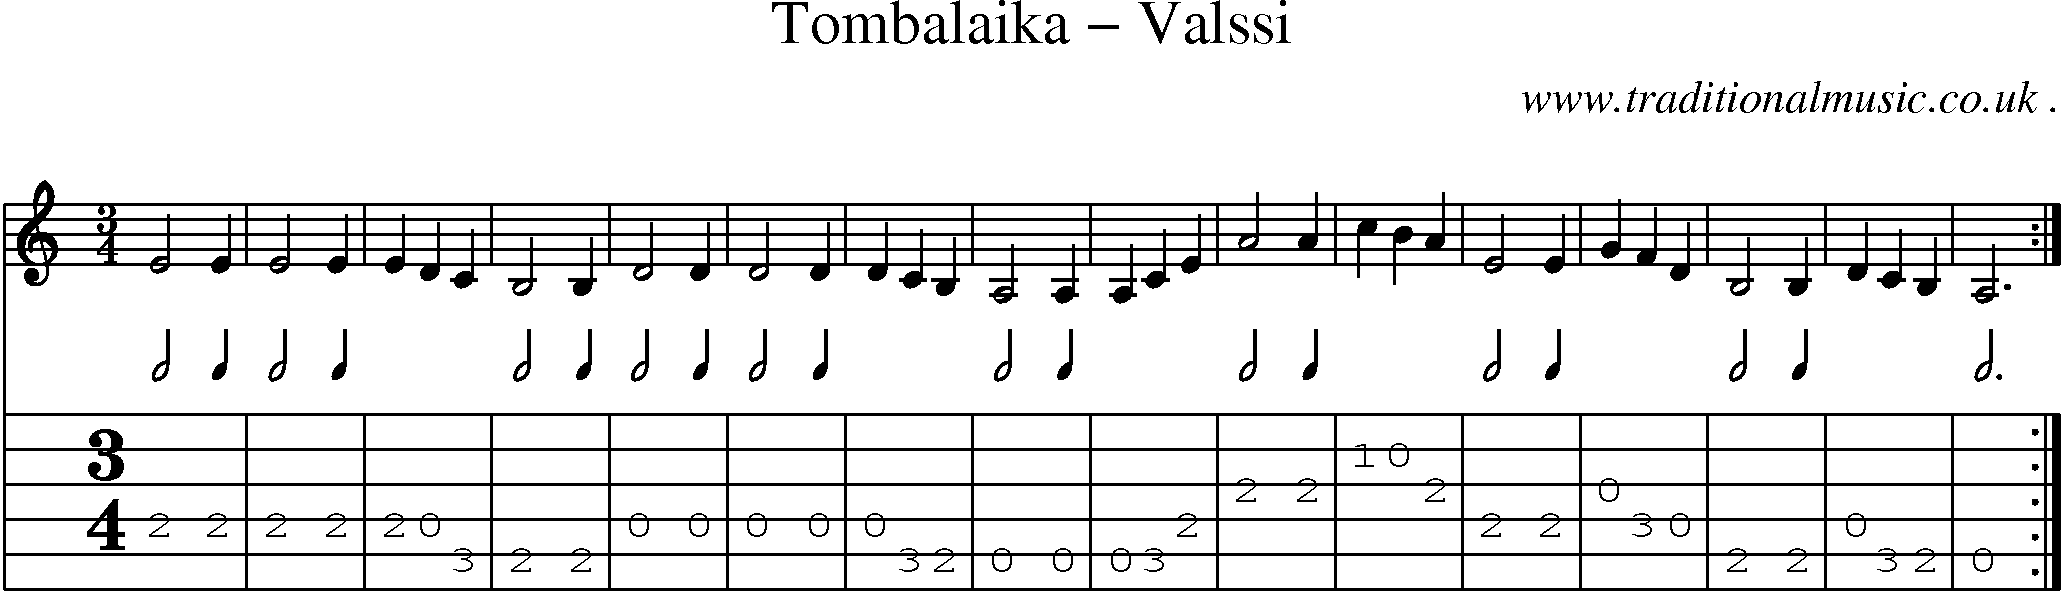 Sheet-Music and Guitar Tabs for Tombalaika Valssi